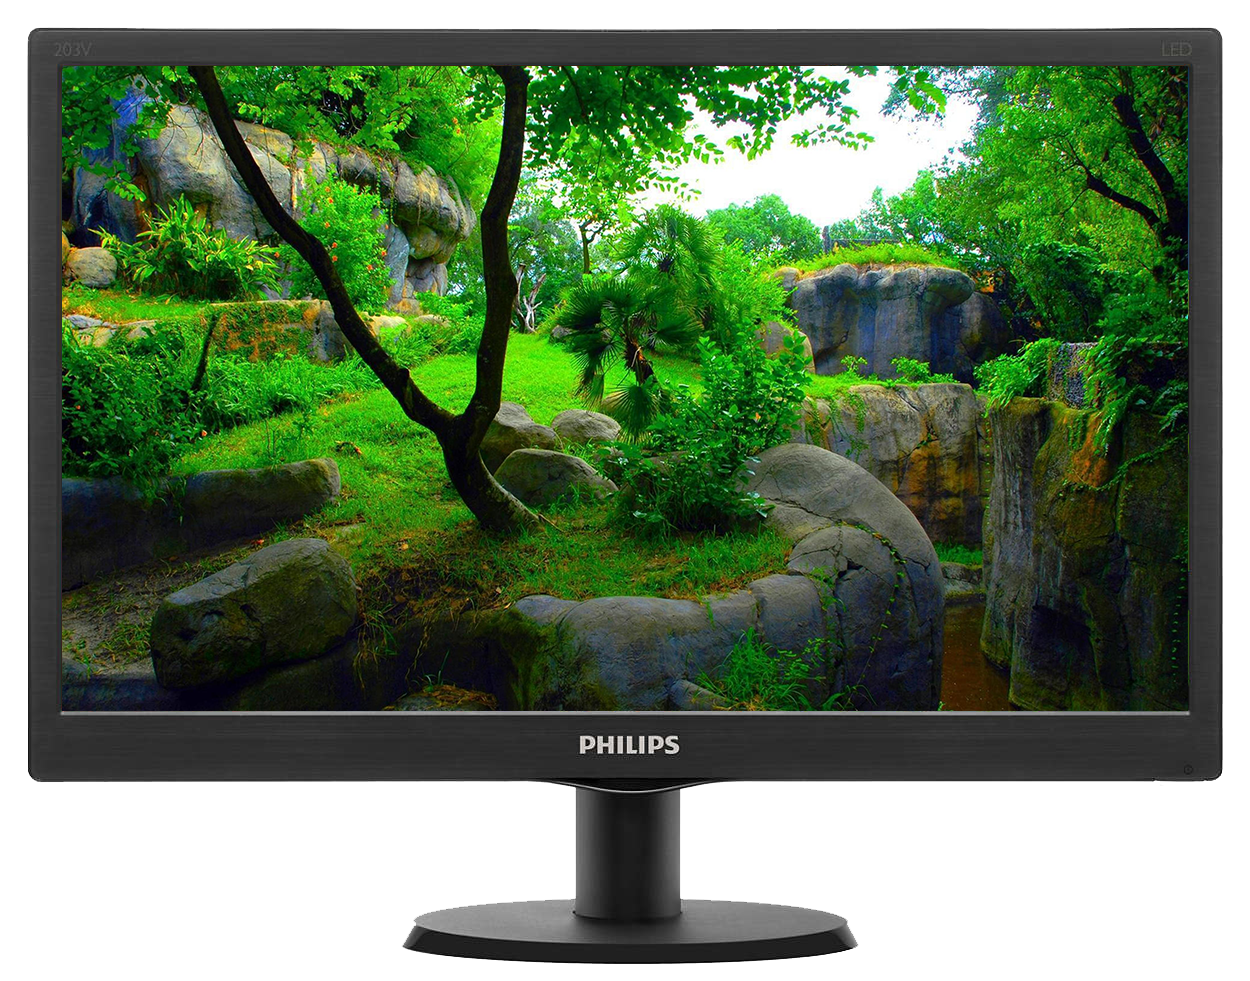 Philips 203v. Монитор Philips 203v5l. Philips LCD Monitor 193v5lsb2. Philips 203v5 LCD.